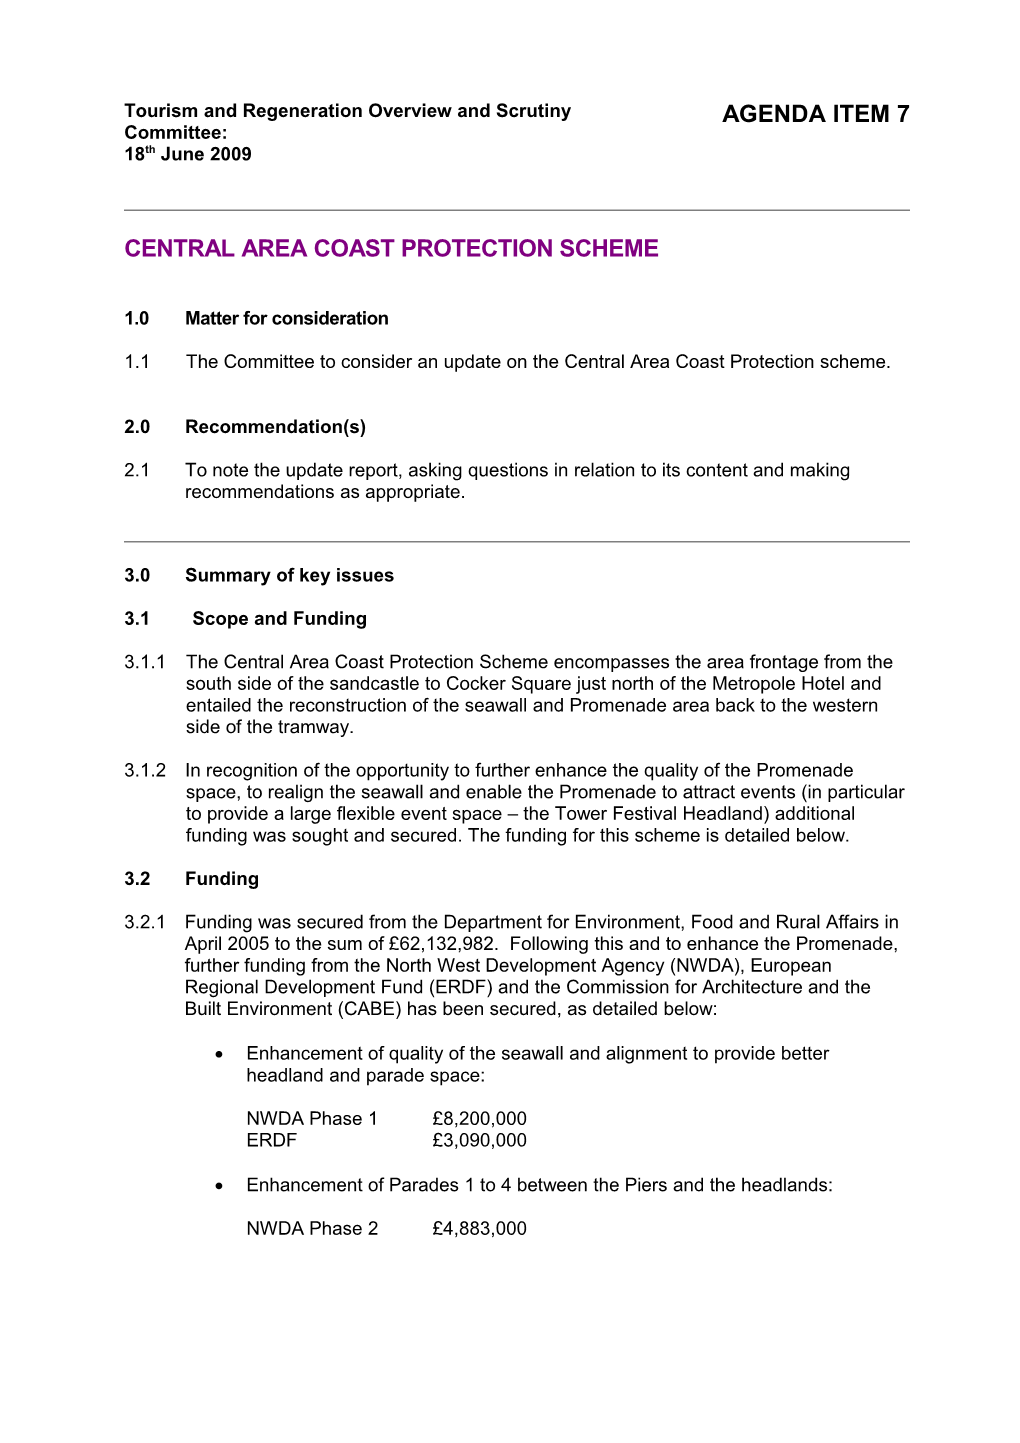 Centralareacoast Protection Scheme